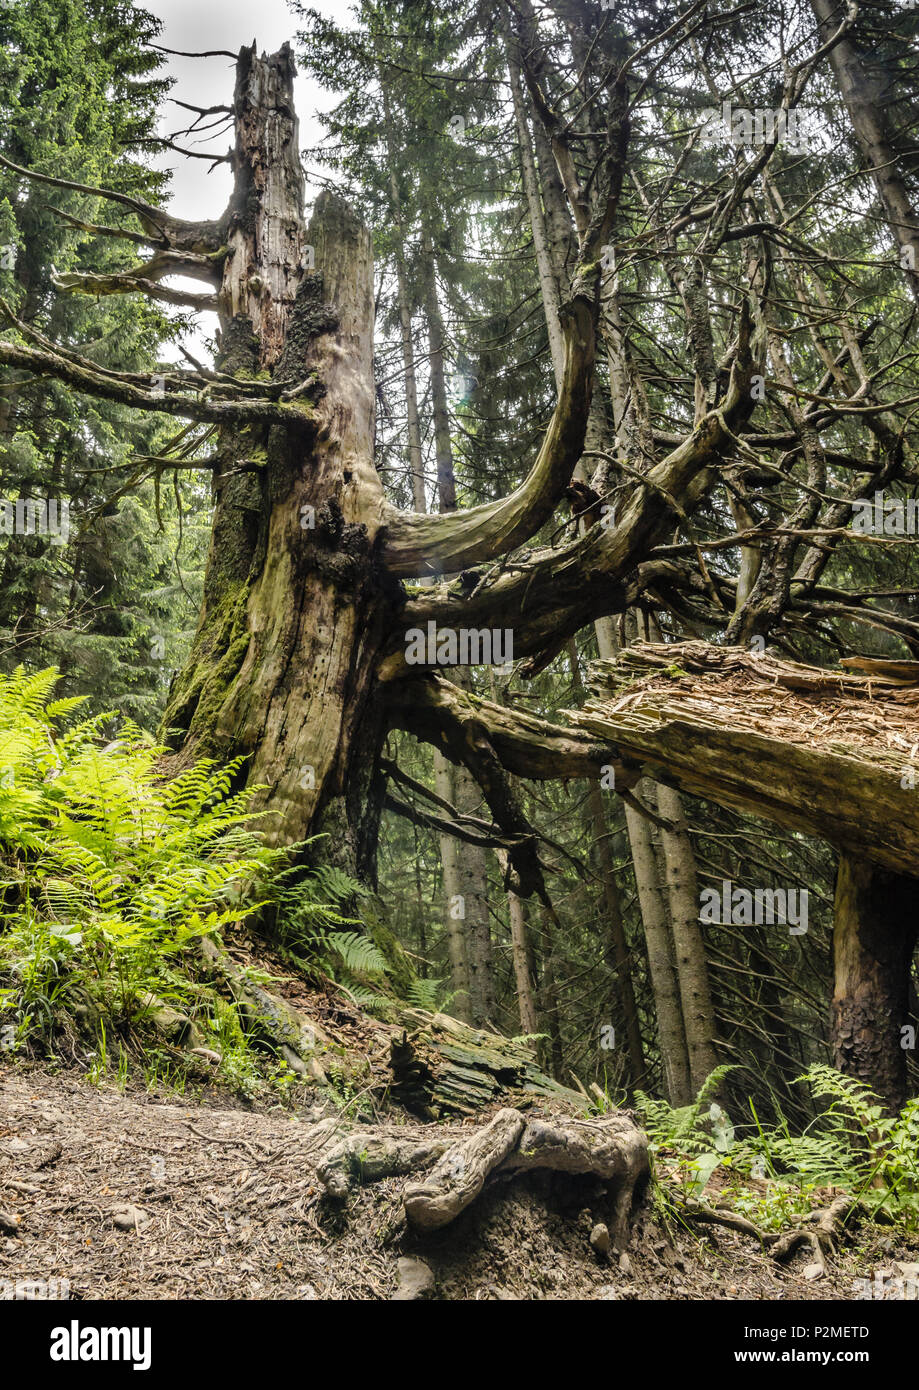 Old tree struck by lightning in the woods of Mount Nebelhorn in Oberstdorf, Oberallgaeu, Germany, Oberstdorf 2015 Stock Photo